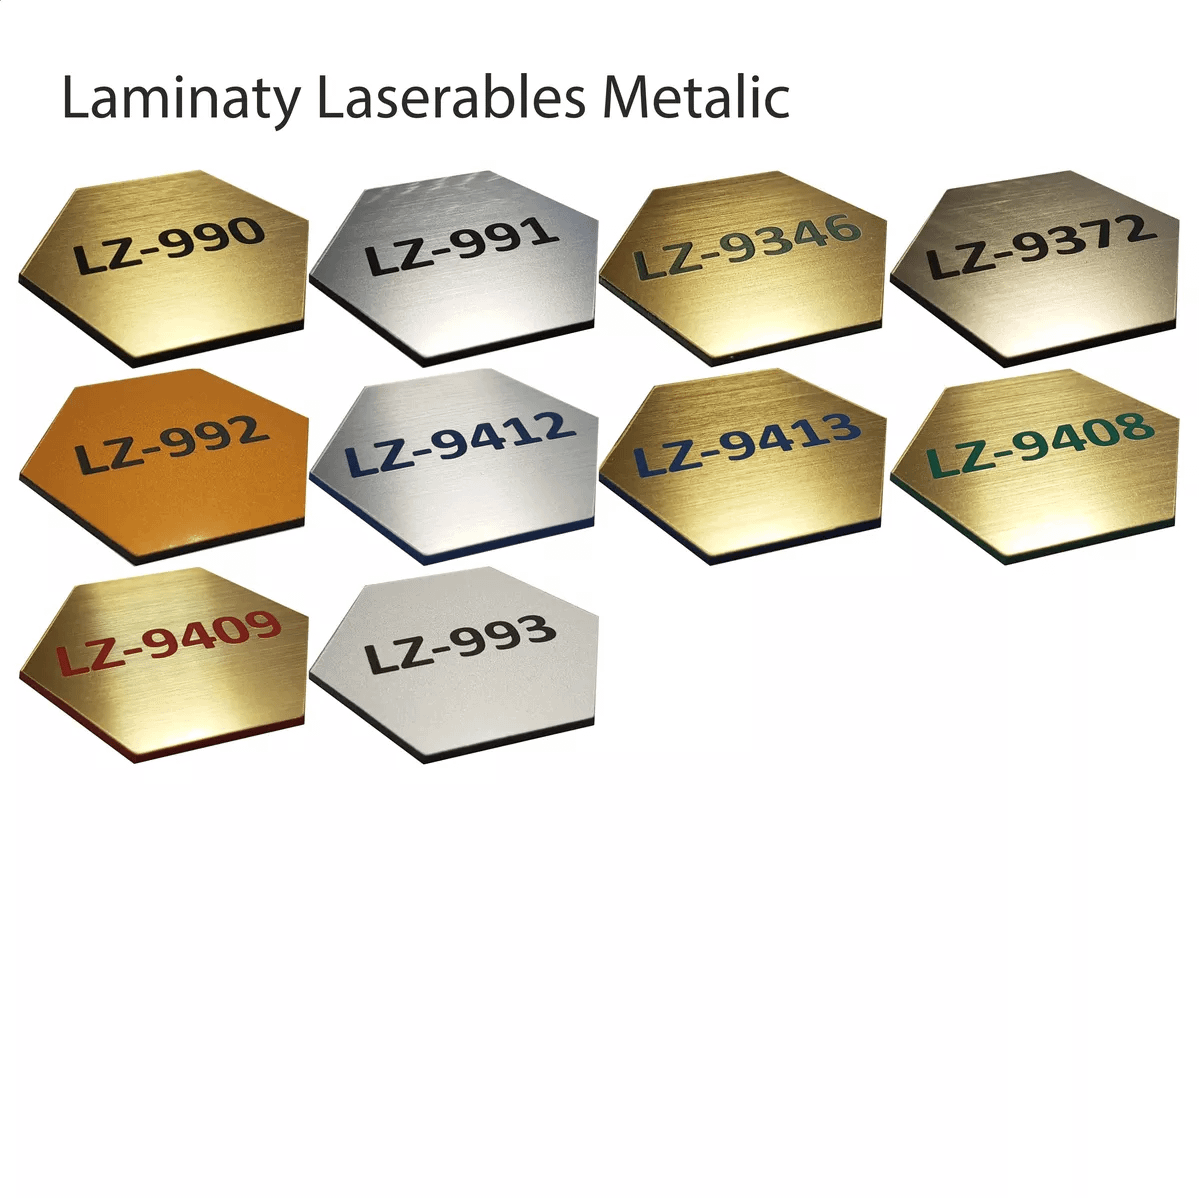 Laminaty Laserables Metalix_webp